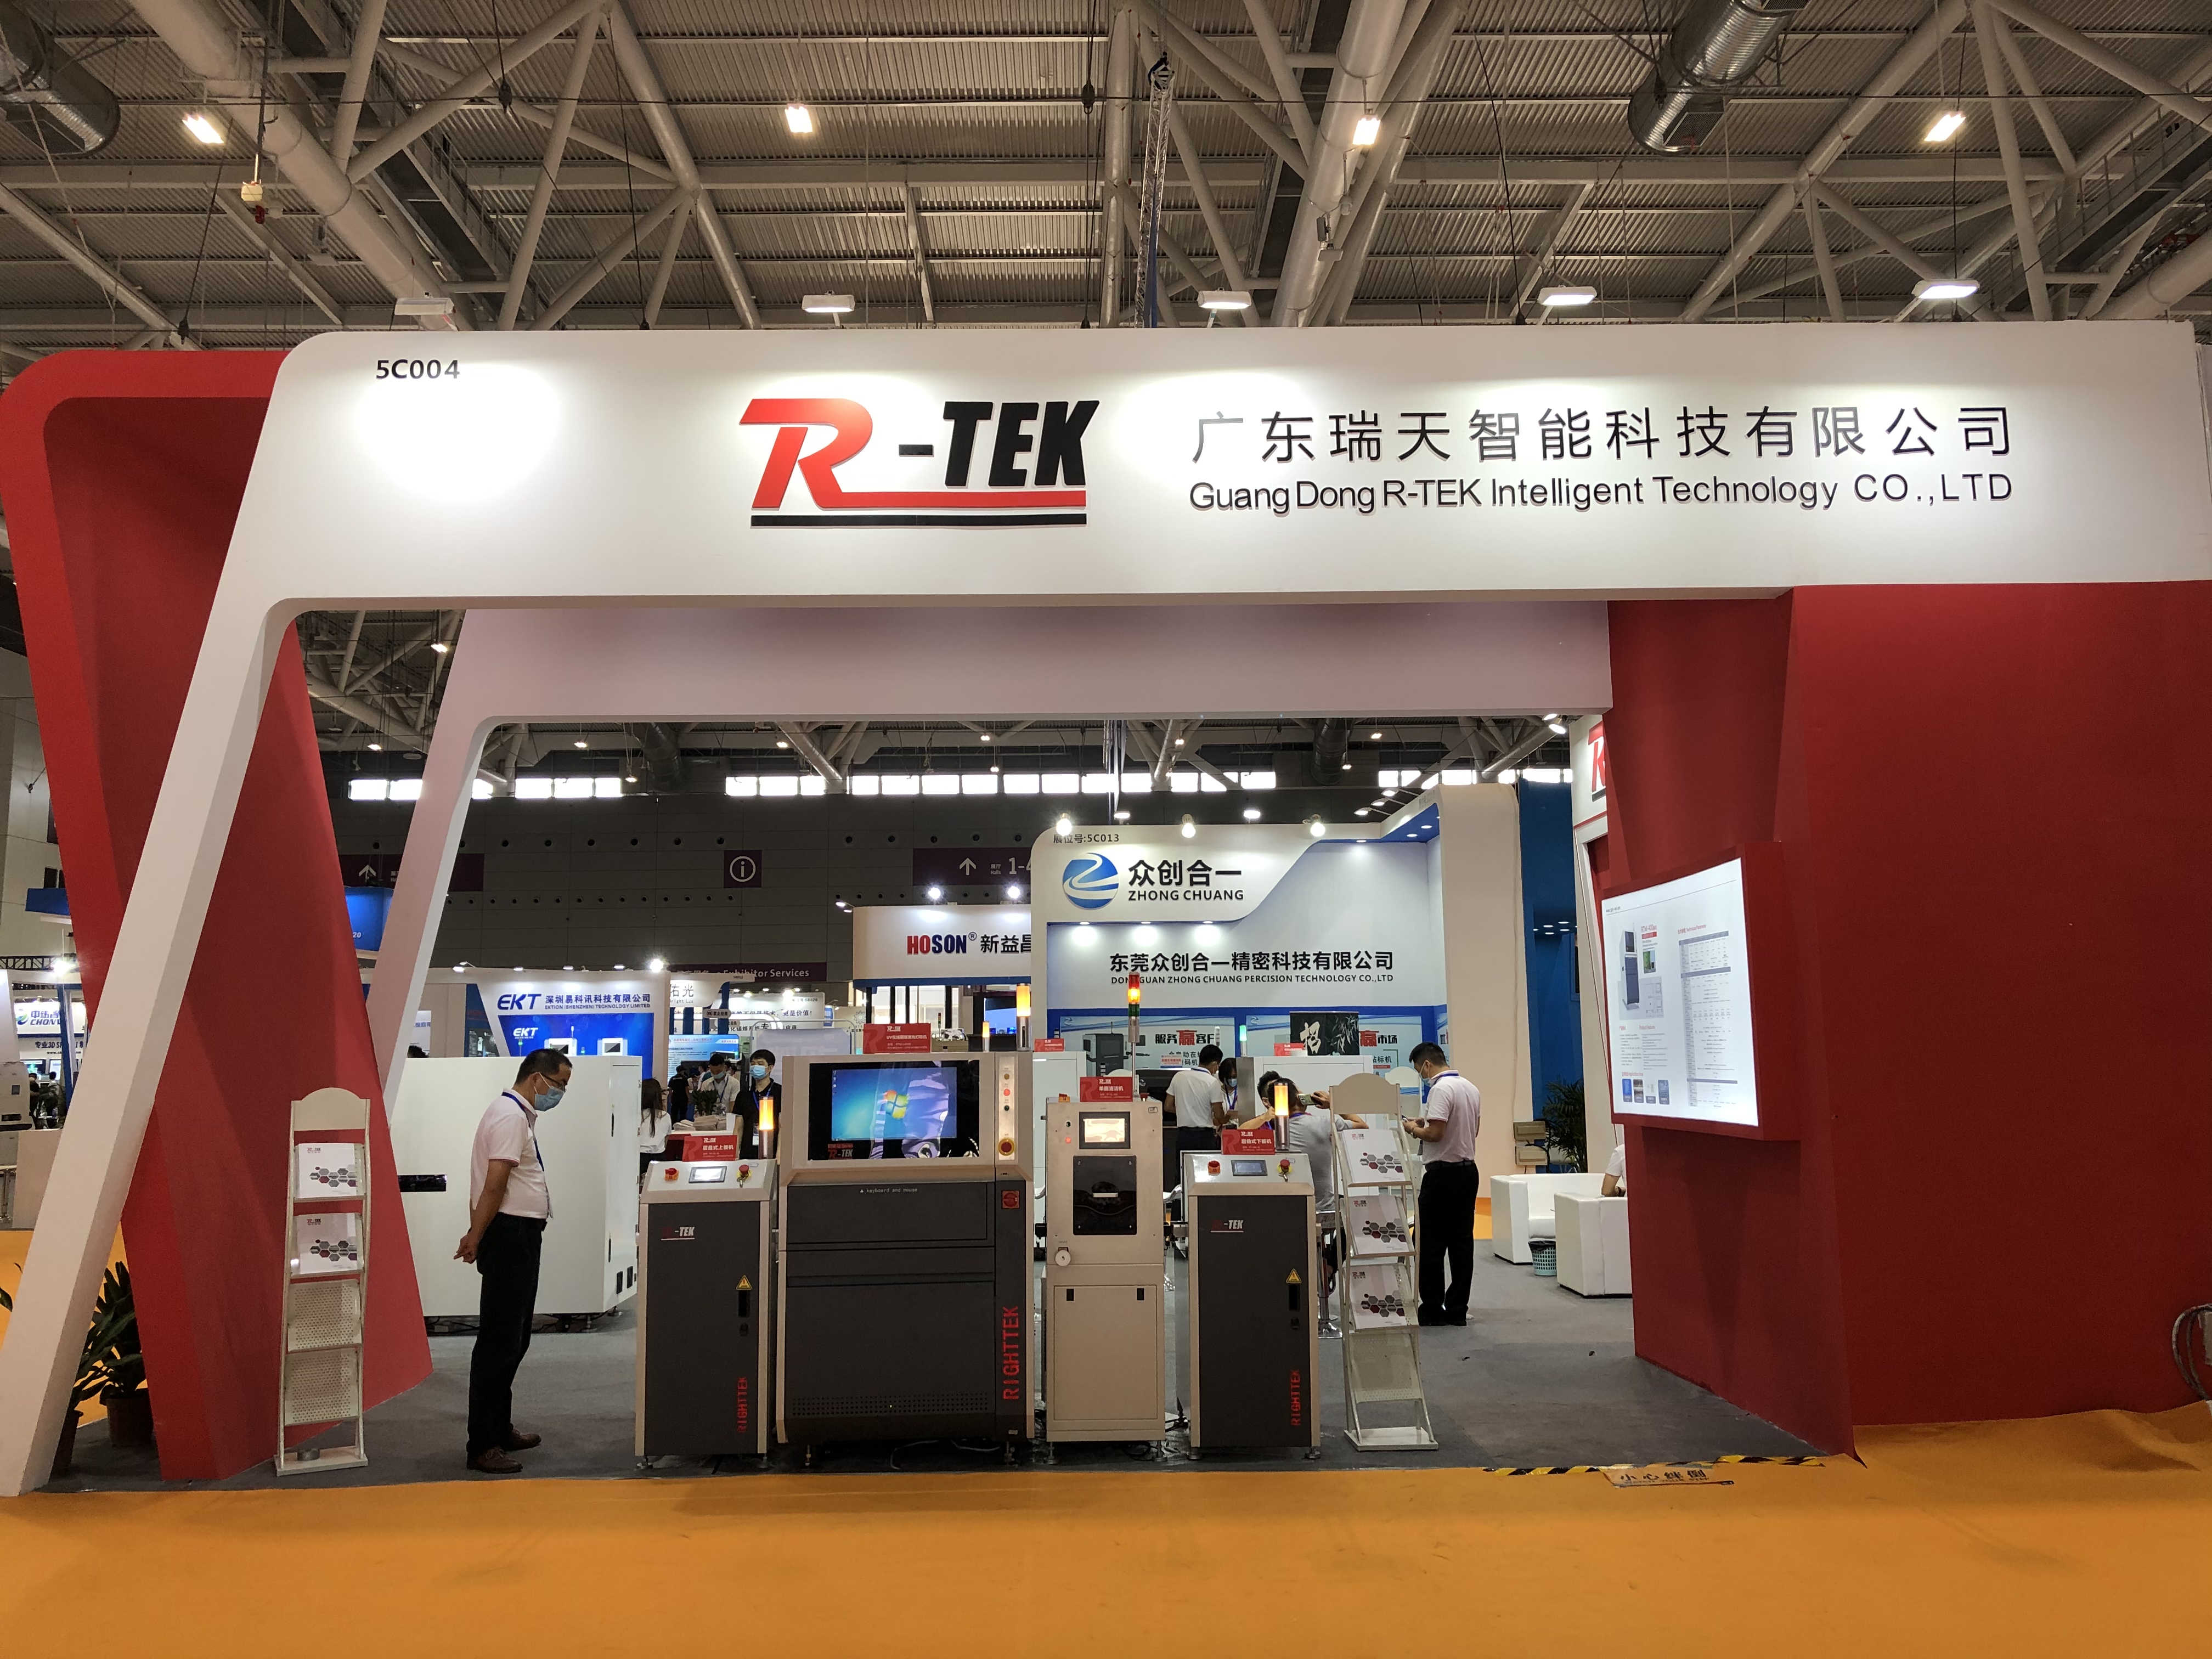 Guangdong R-TEK Intelligent Technology Co. Ltd.